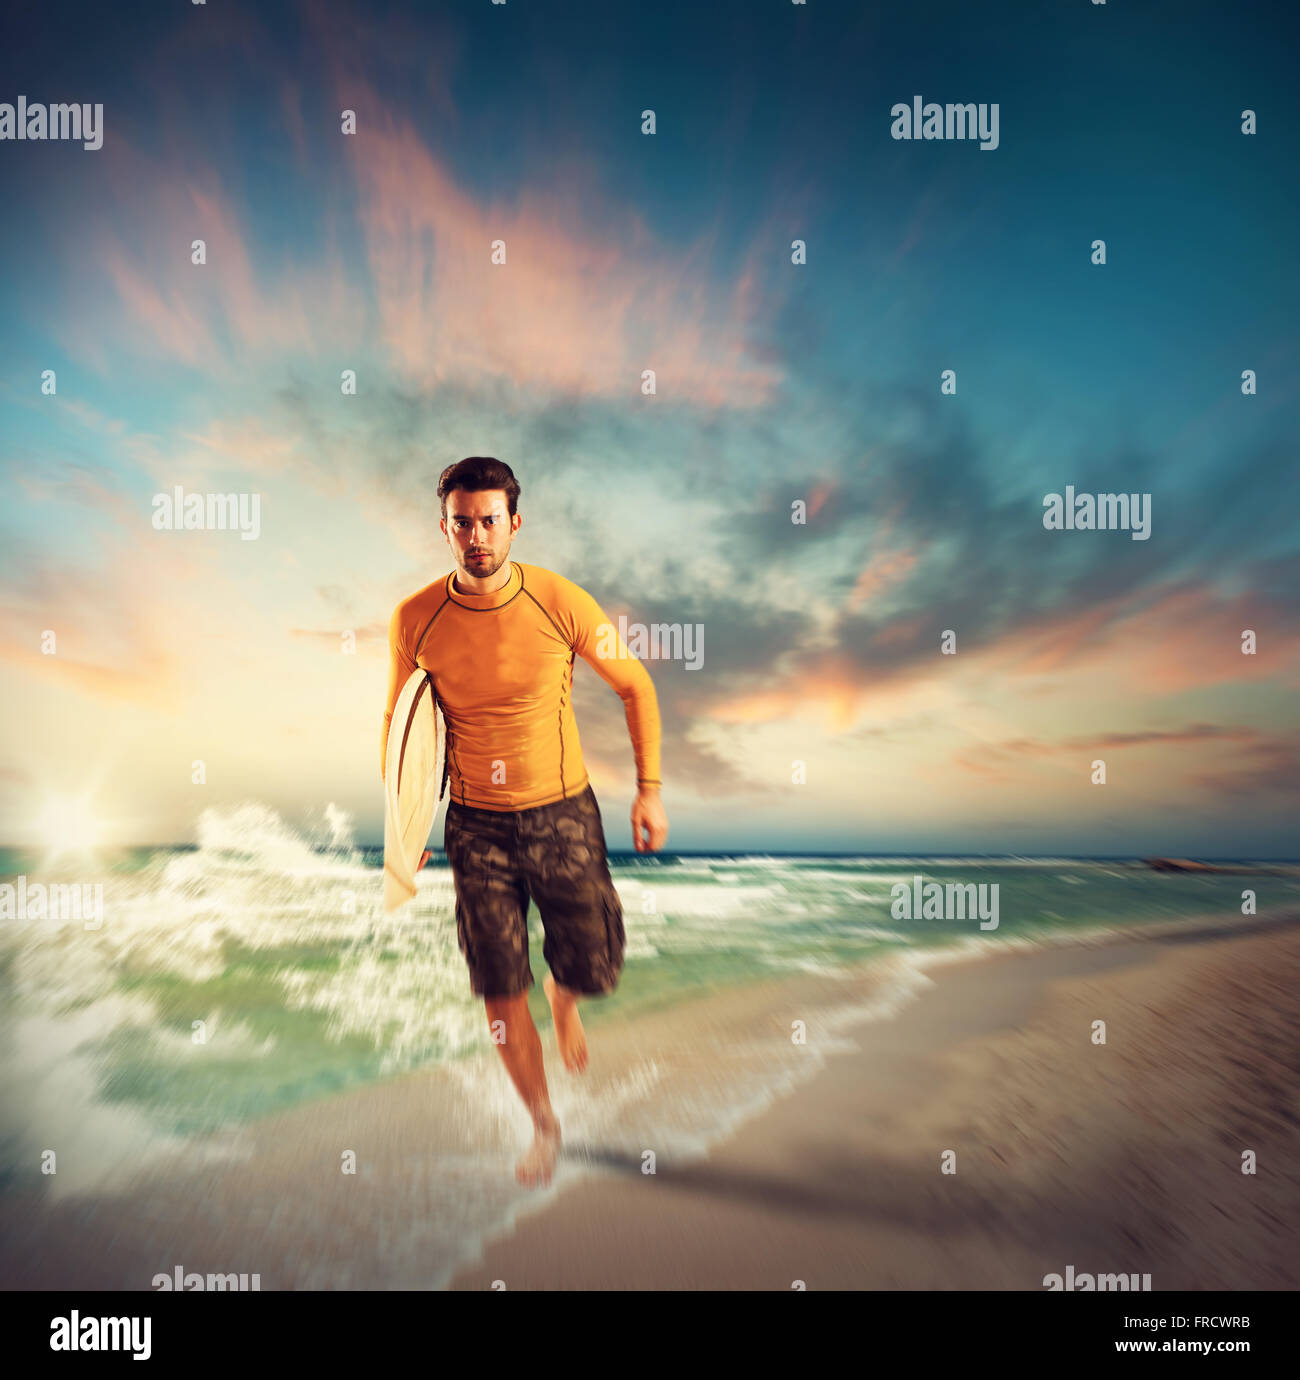 Surfer on the beach Stock Photo